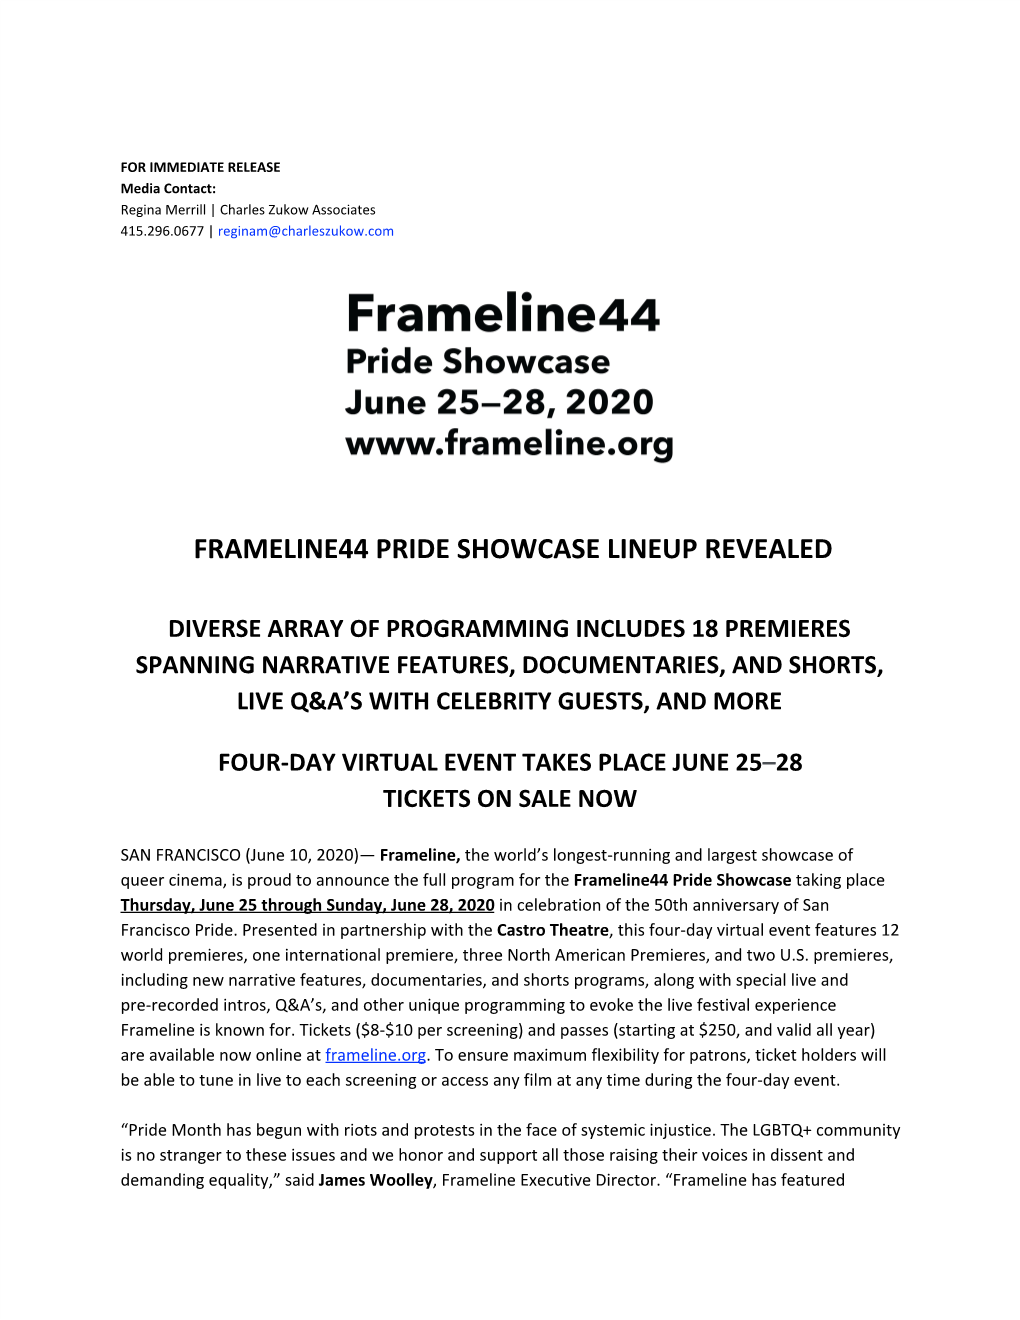 Frameline44 Pride Showcase Lineup Revealed